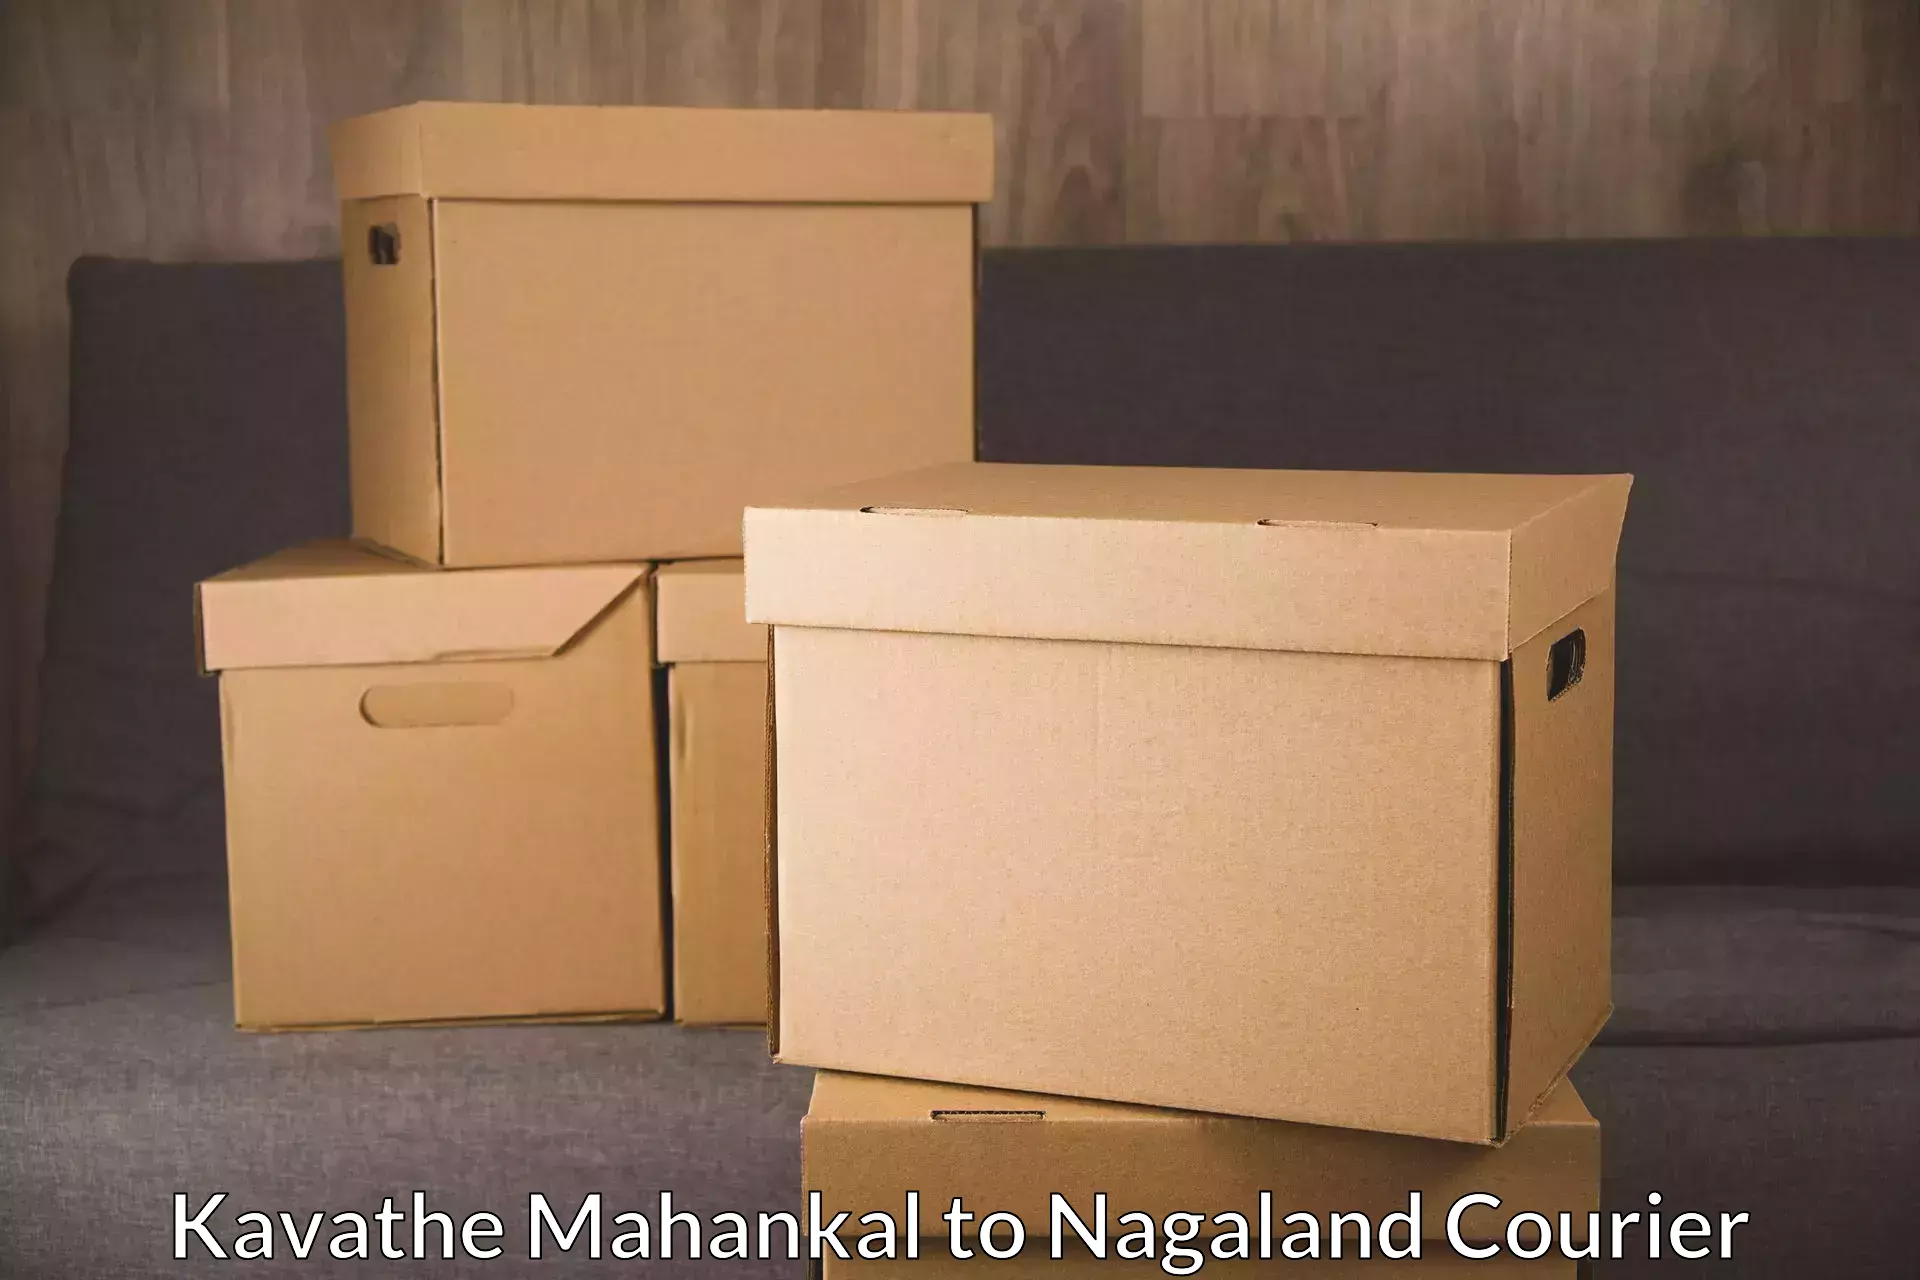 Multi-city courier Kavathe Mahankal to Mon